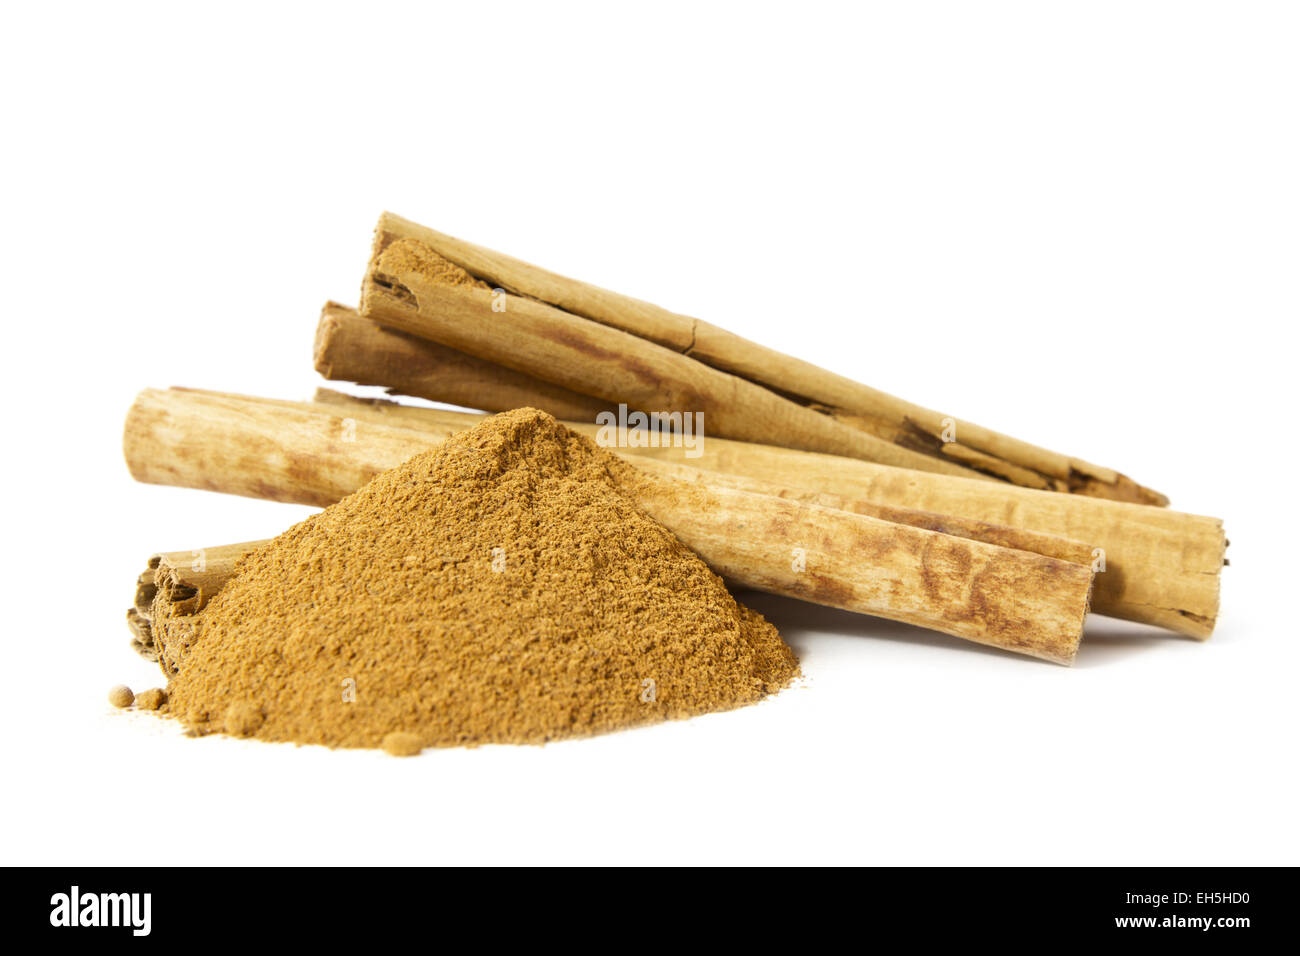 Organic cinnamon sticks and cinnamon spice powder. Side view on white background. Stock Photo